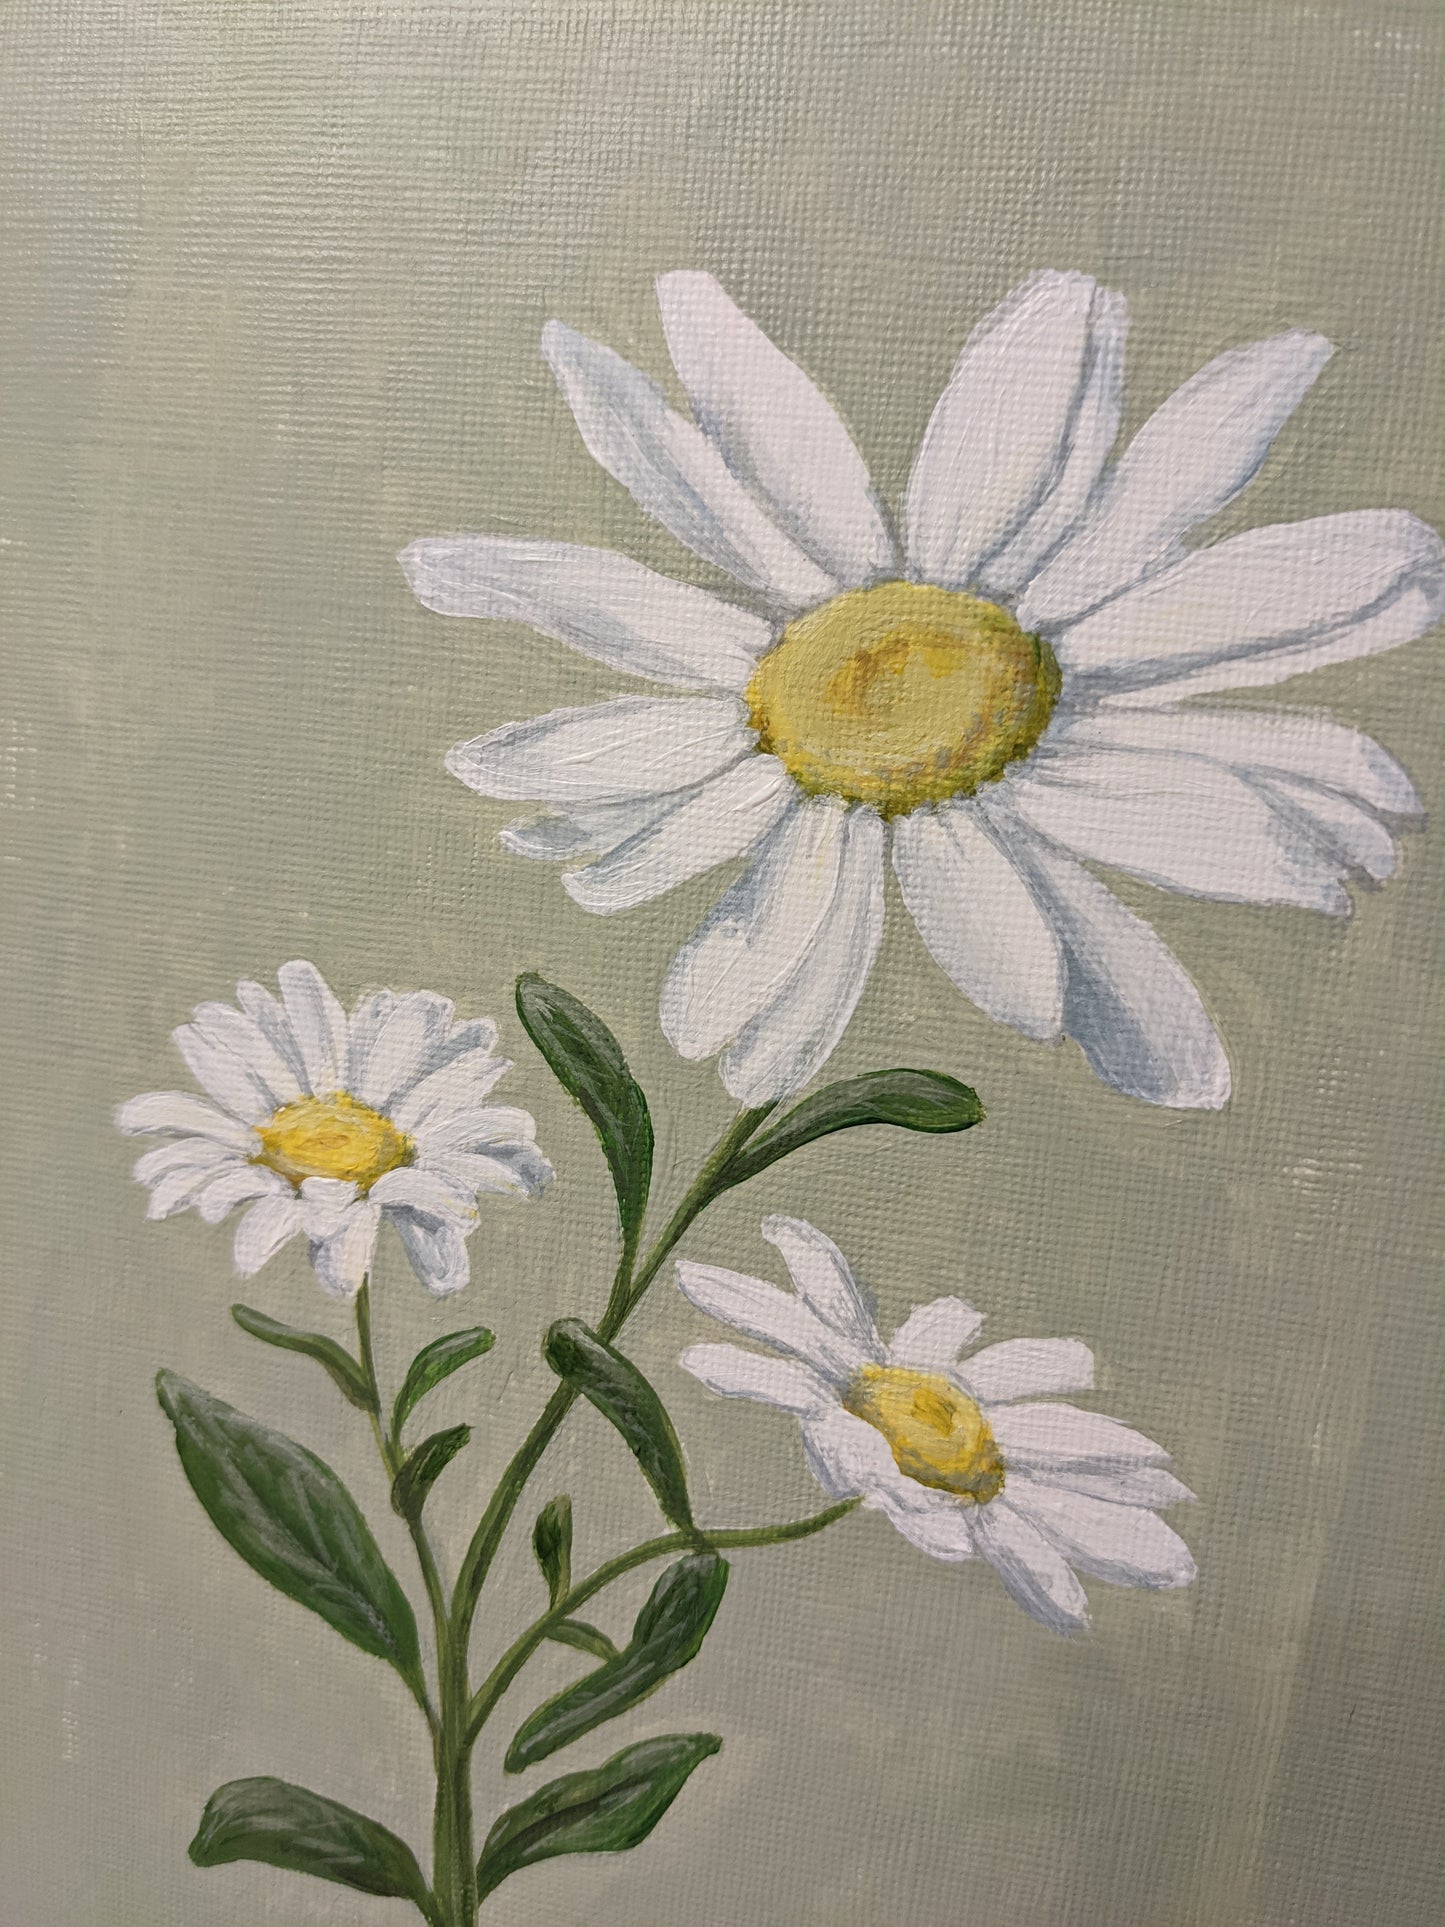 Day 2 Daisy | 9X12 inch original painting